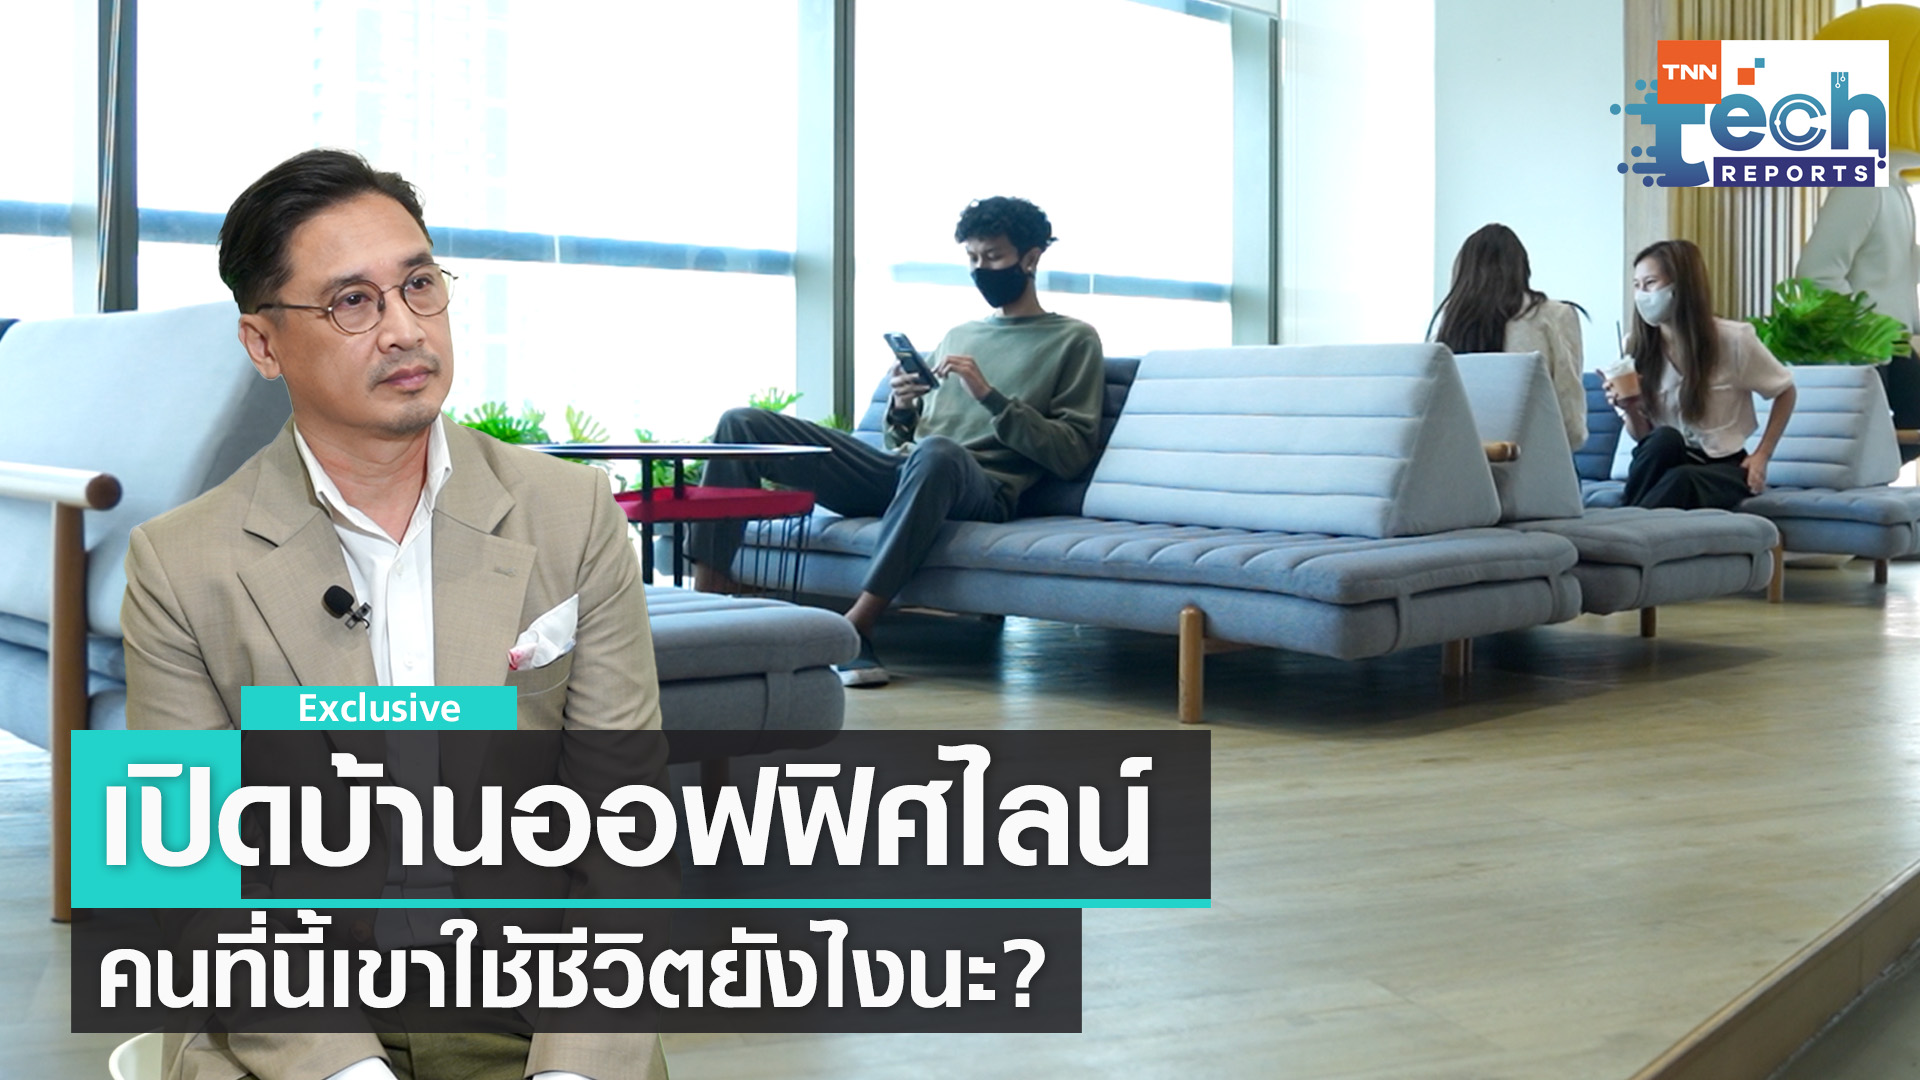 LINE ประเทศไทย Work-life Revolution ยกเครื่องเรื่องออฟฟิศ | TNN Tech Reports Weekly 